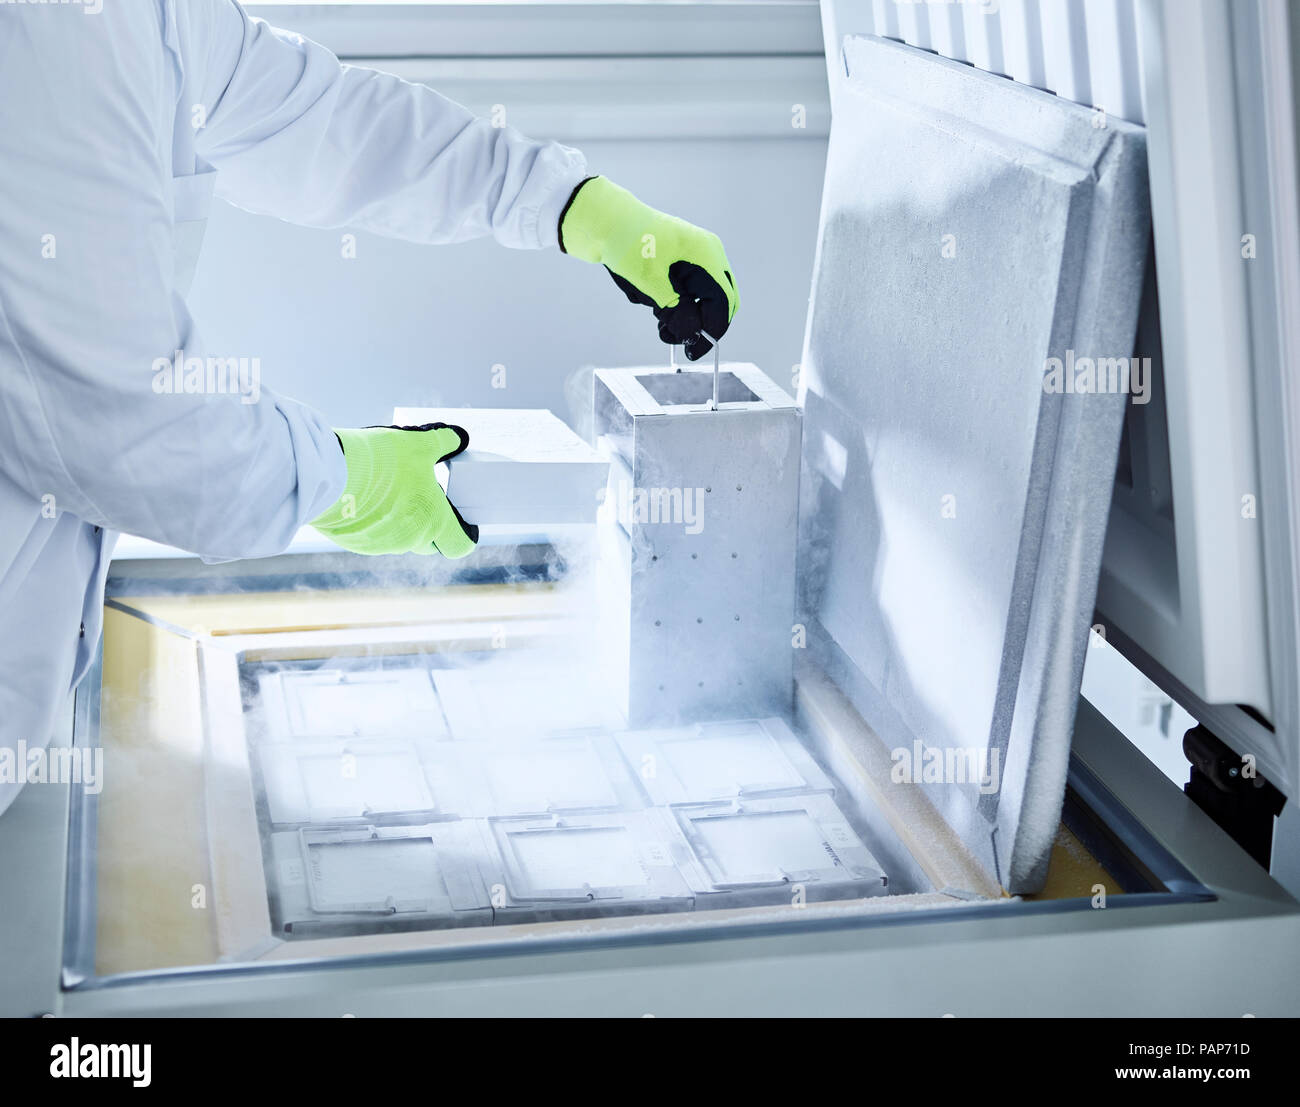 Chemist open upright freezer with gloves Stock Photo